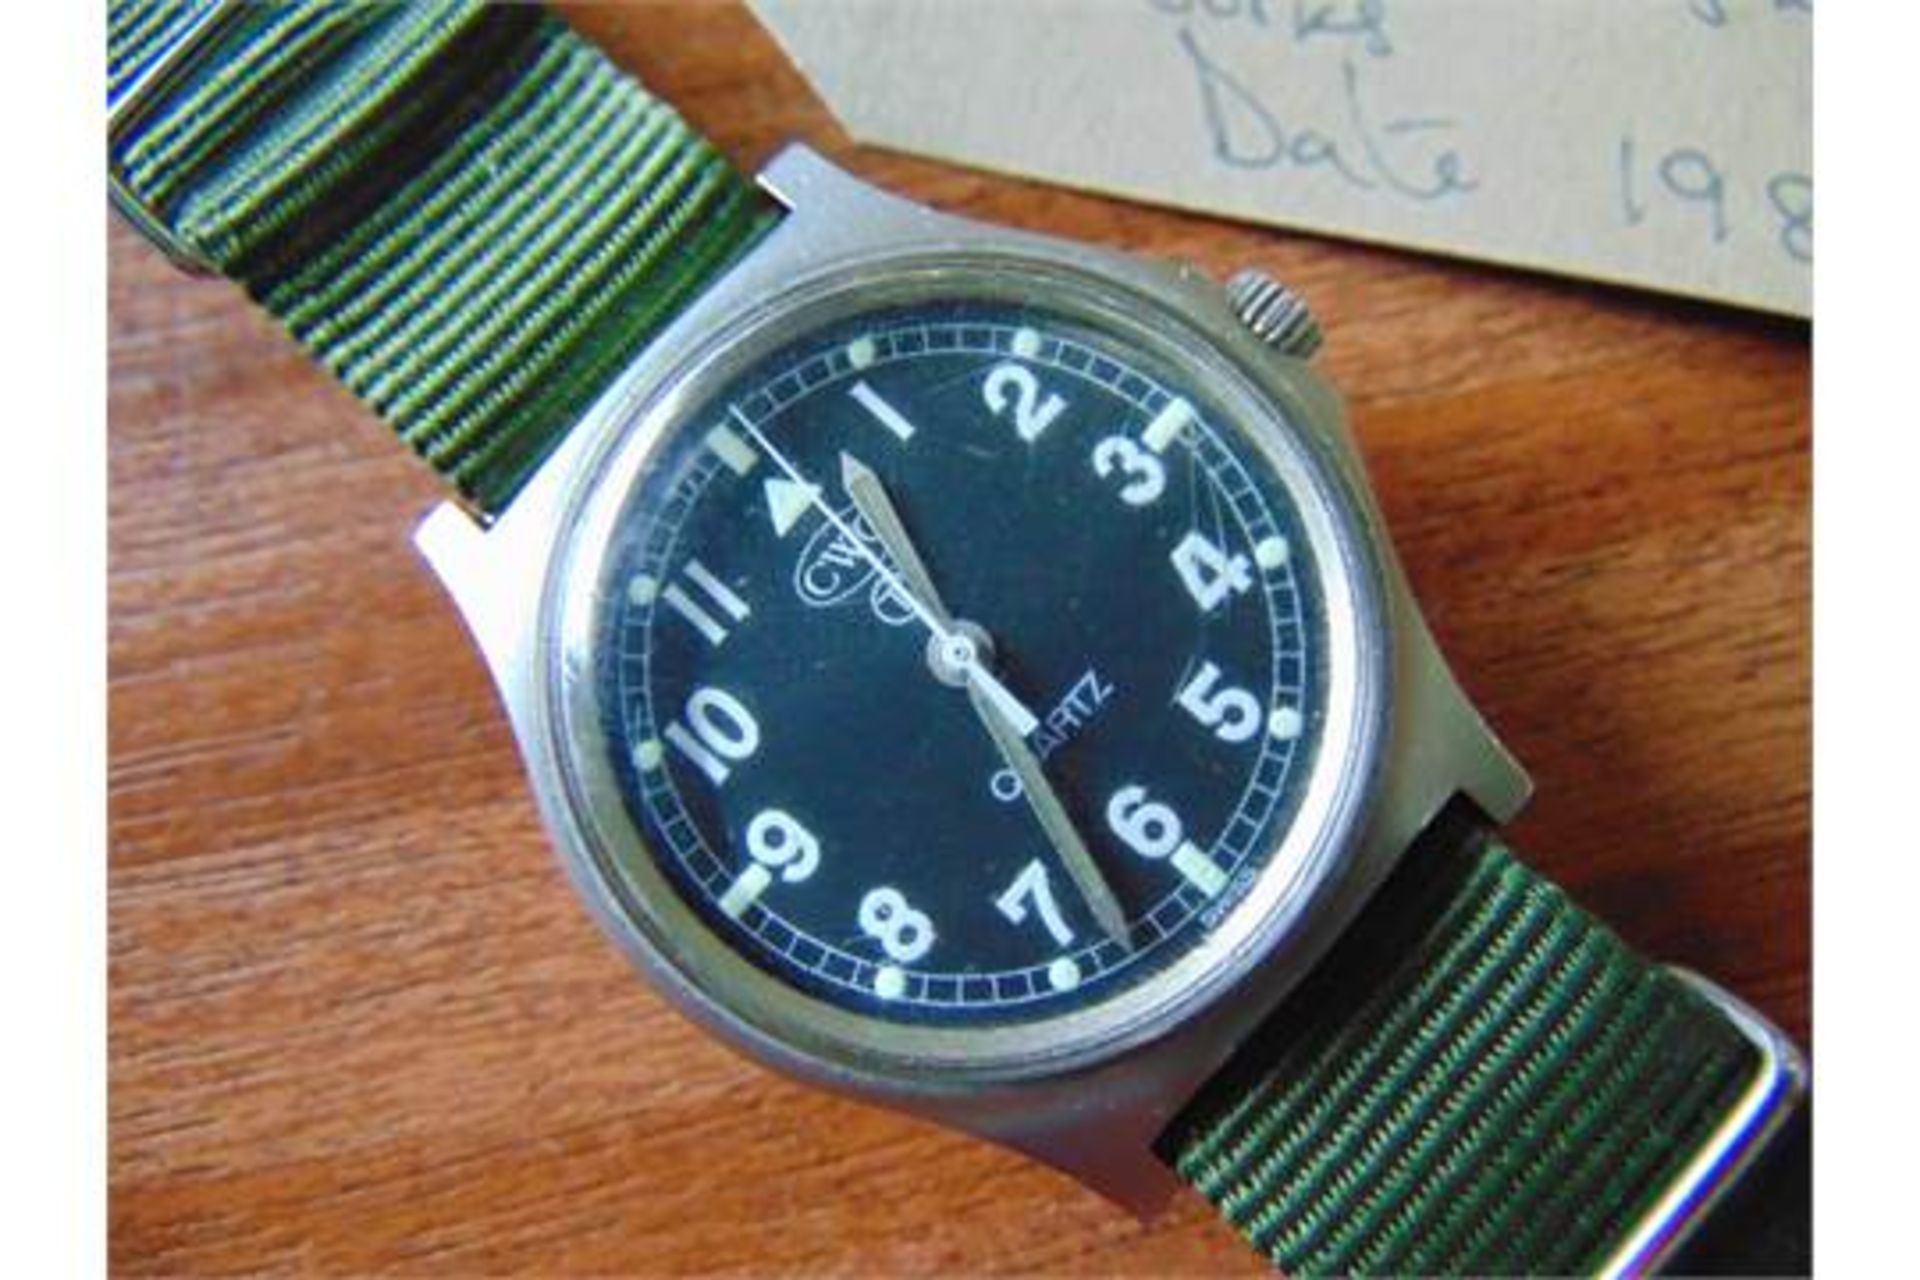 Genuine British Army CWC (Fat Boy/Fat Case) quartz wrist watch